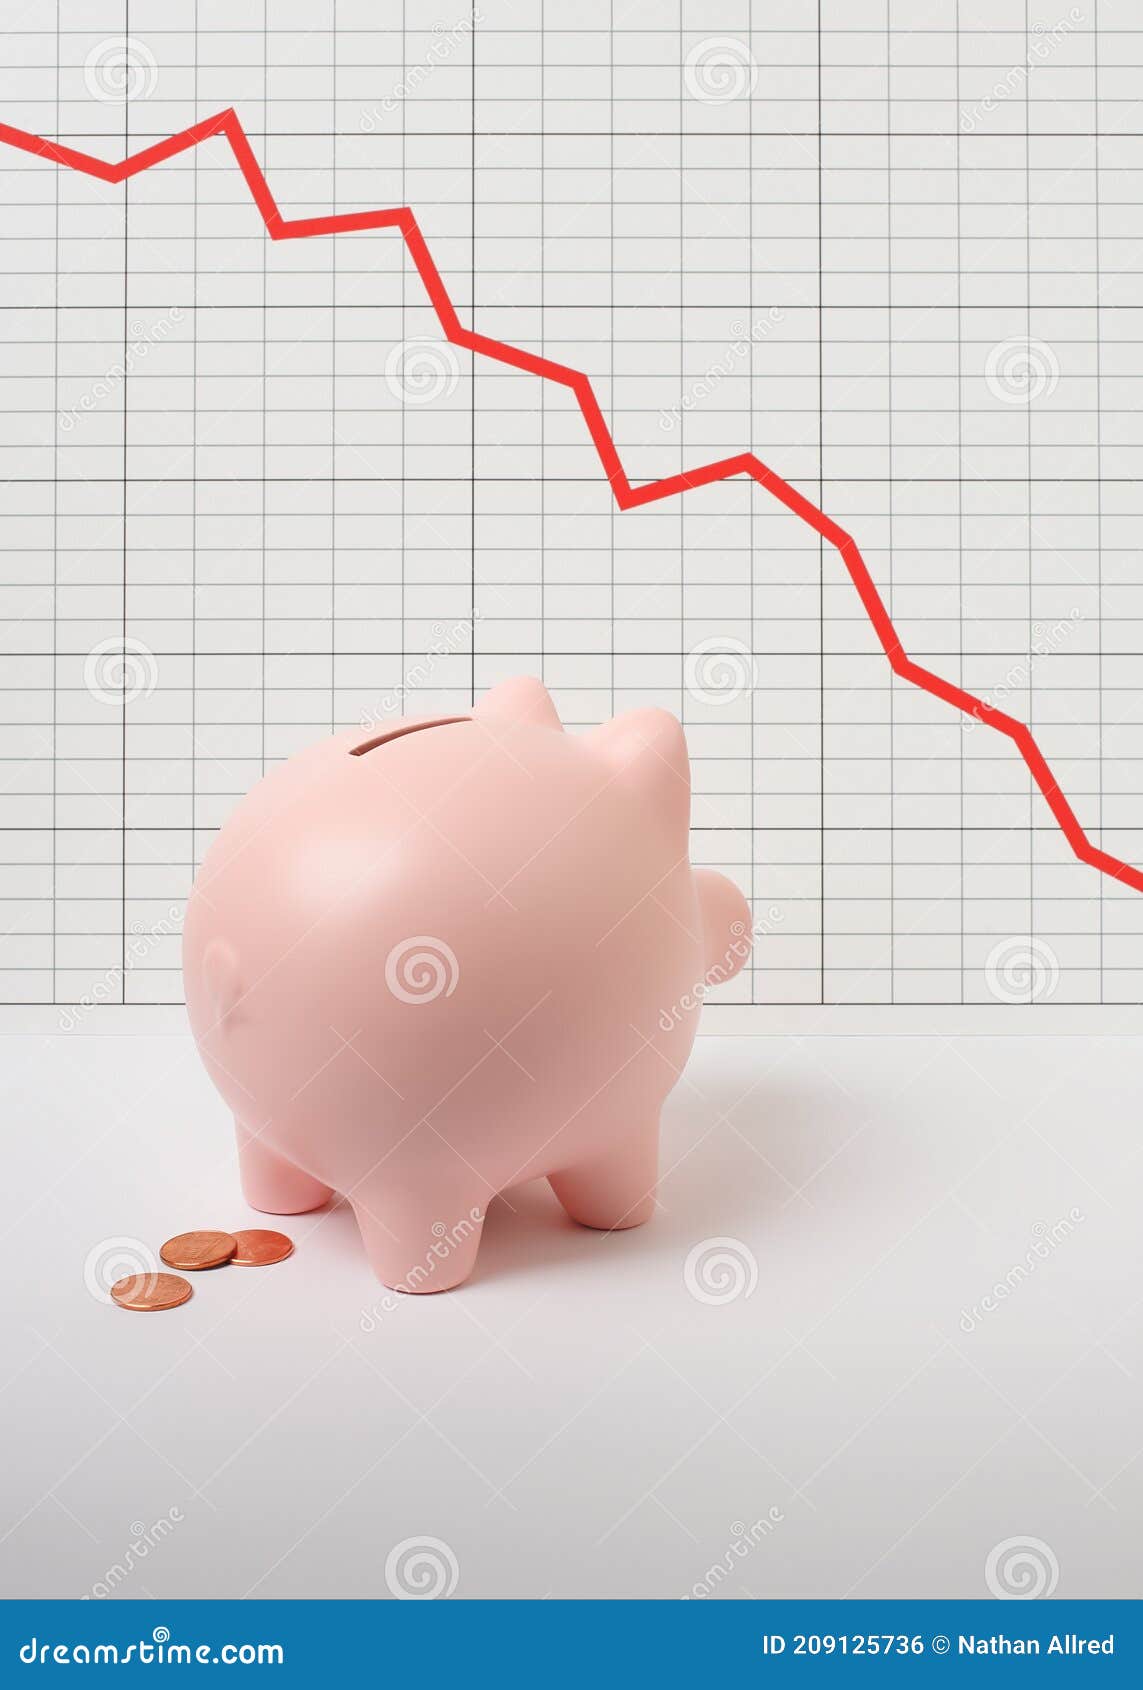 piggy bank and economic downturn